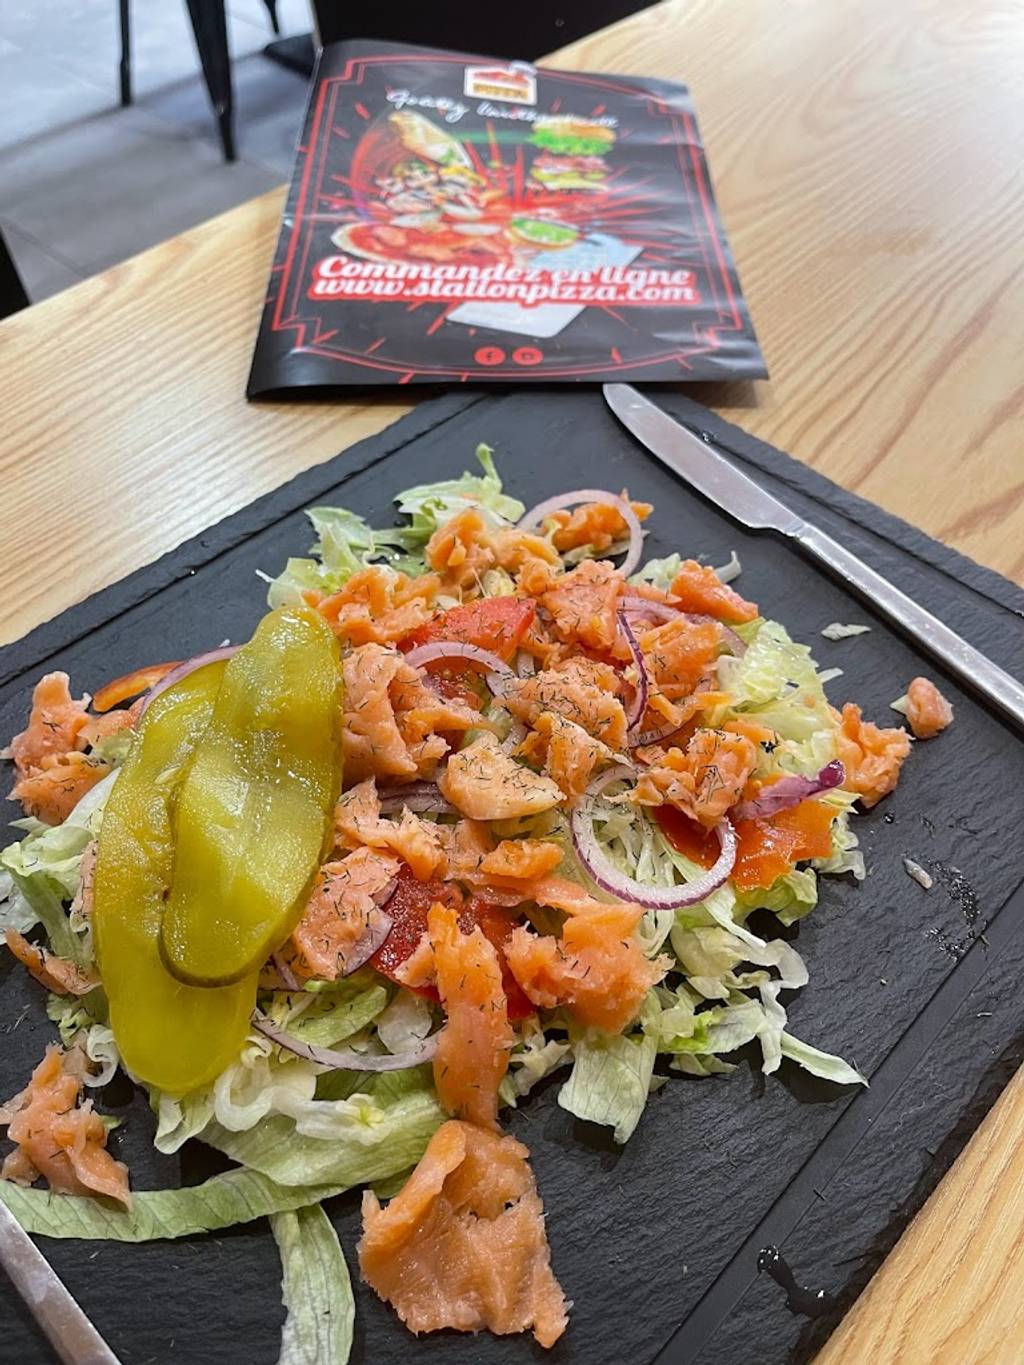 Station Pizza Monplaisir Lumière Lyon - Food Recipe Tableware Ingredient Leaf vegetable